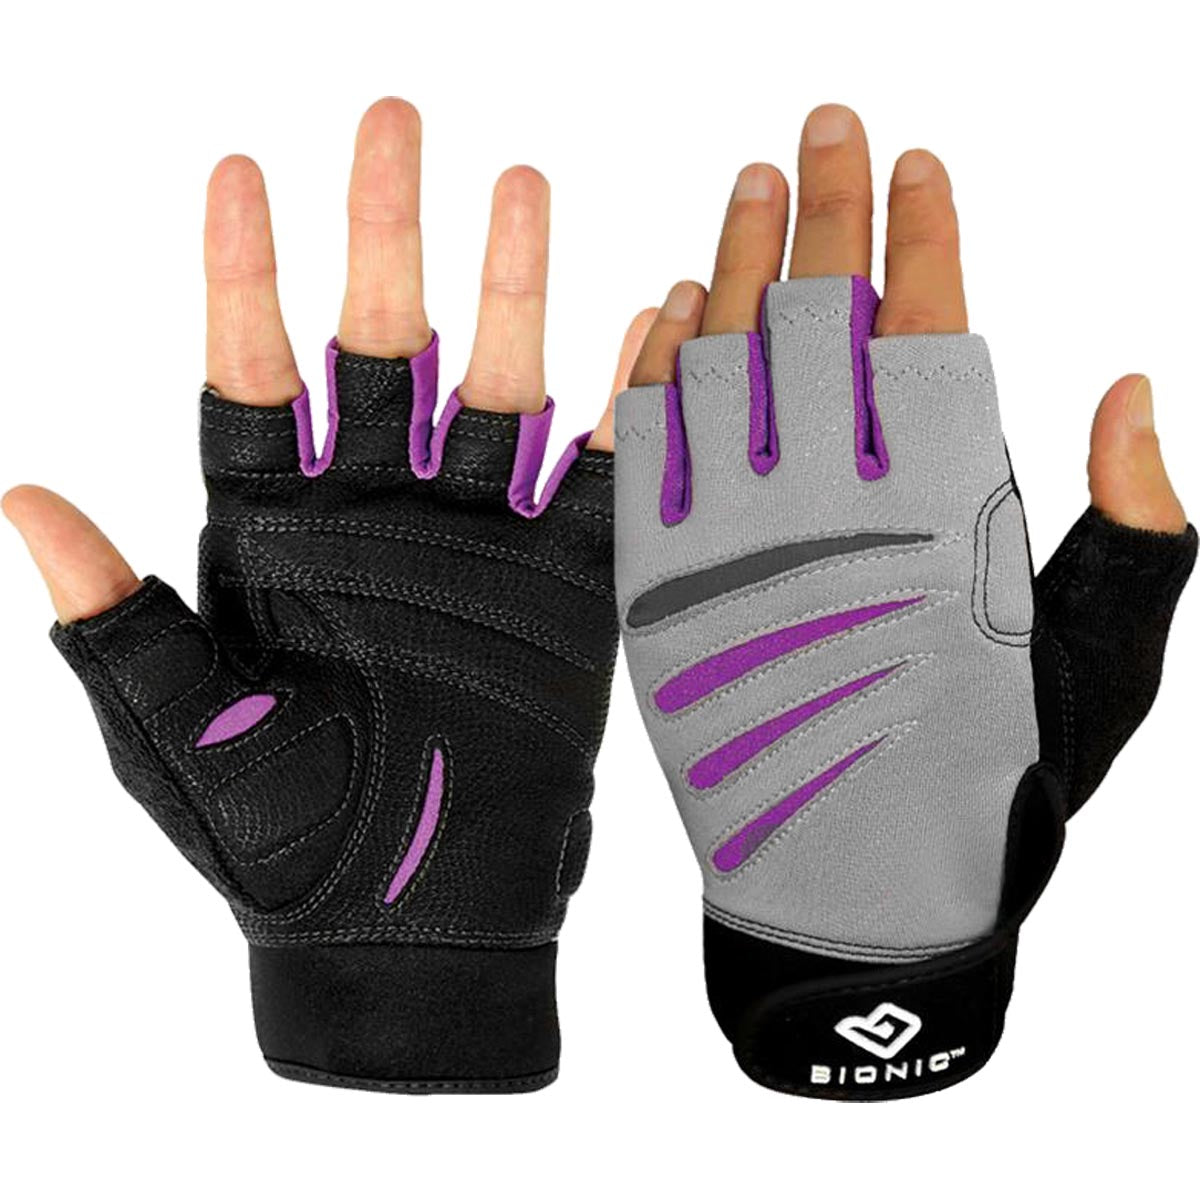 Bionic Women's Fingerless Glove